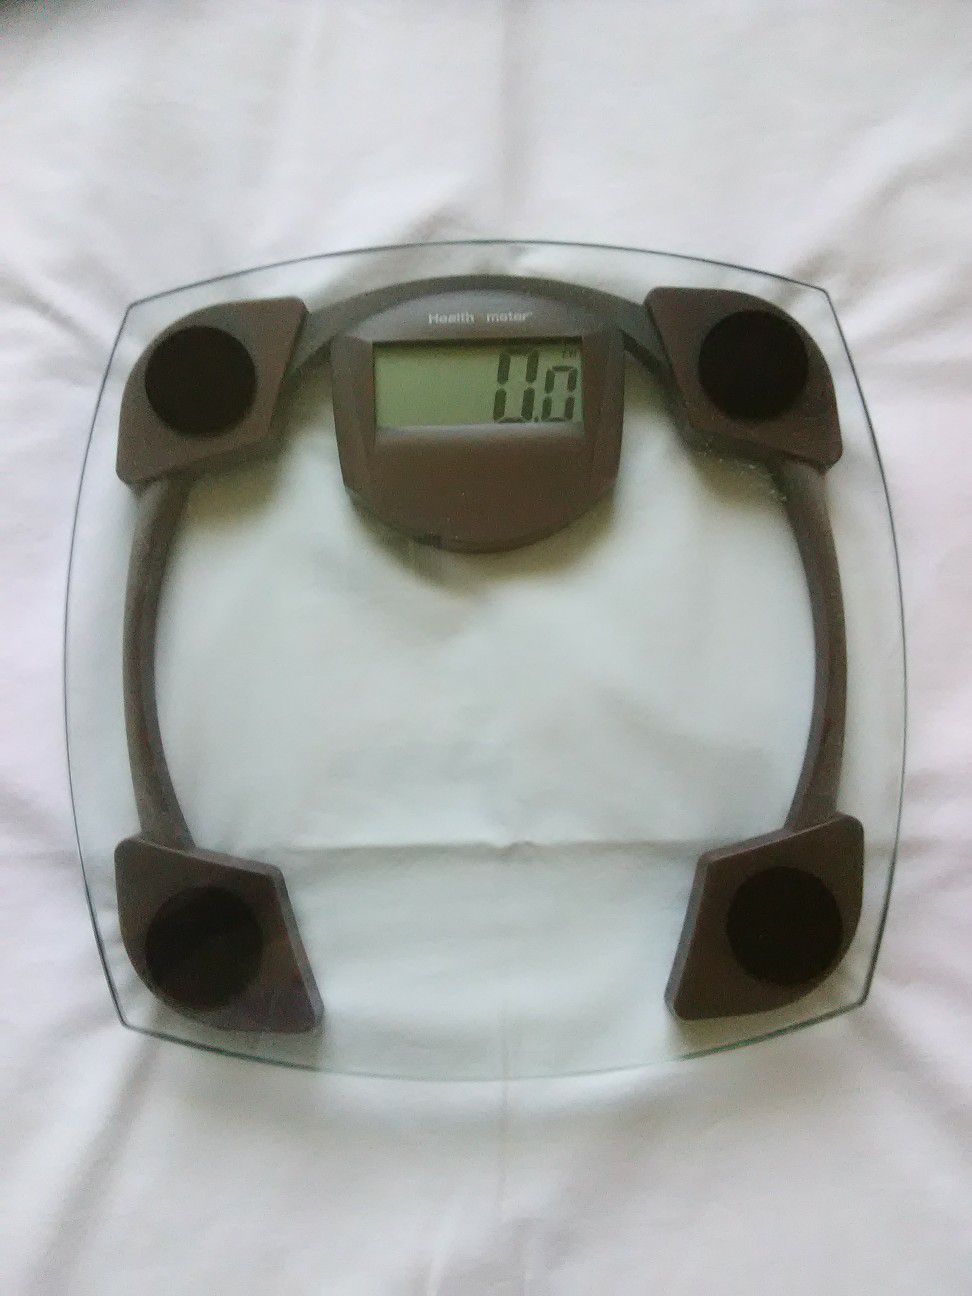 Health O Meter Bathroom Digital Glass Weighing Scale 330lb Max